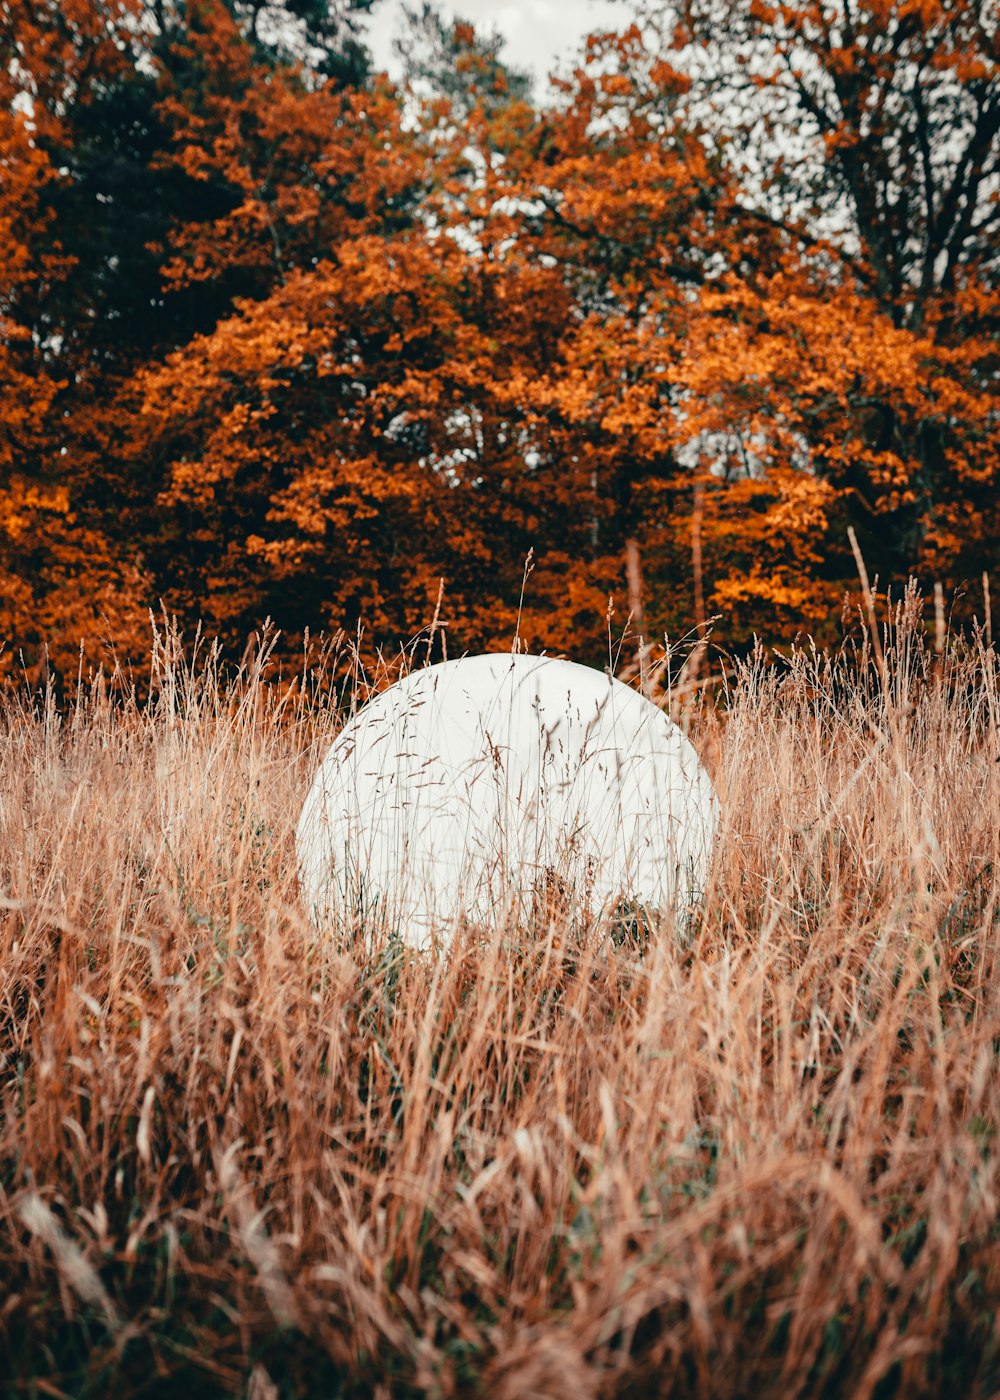 white ball on grass